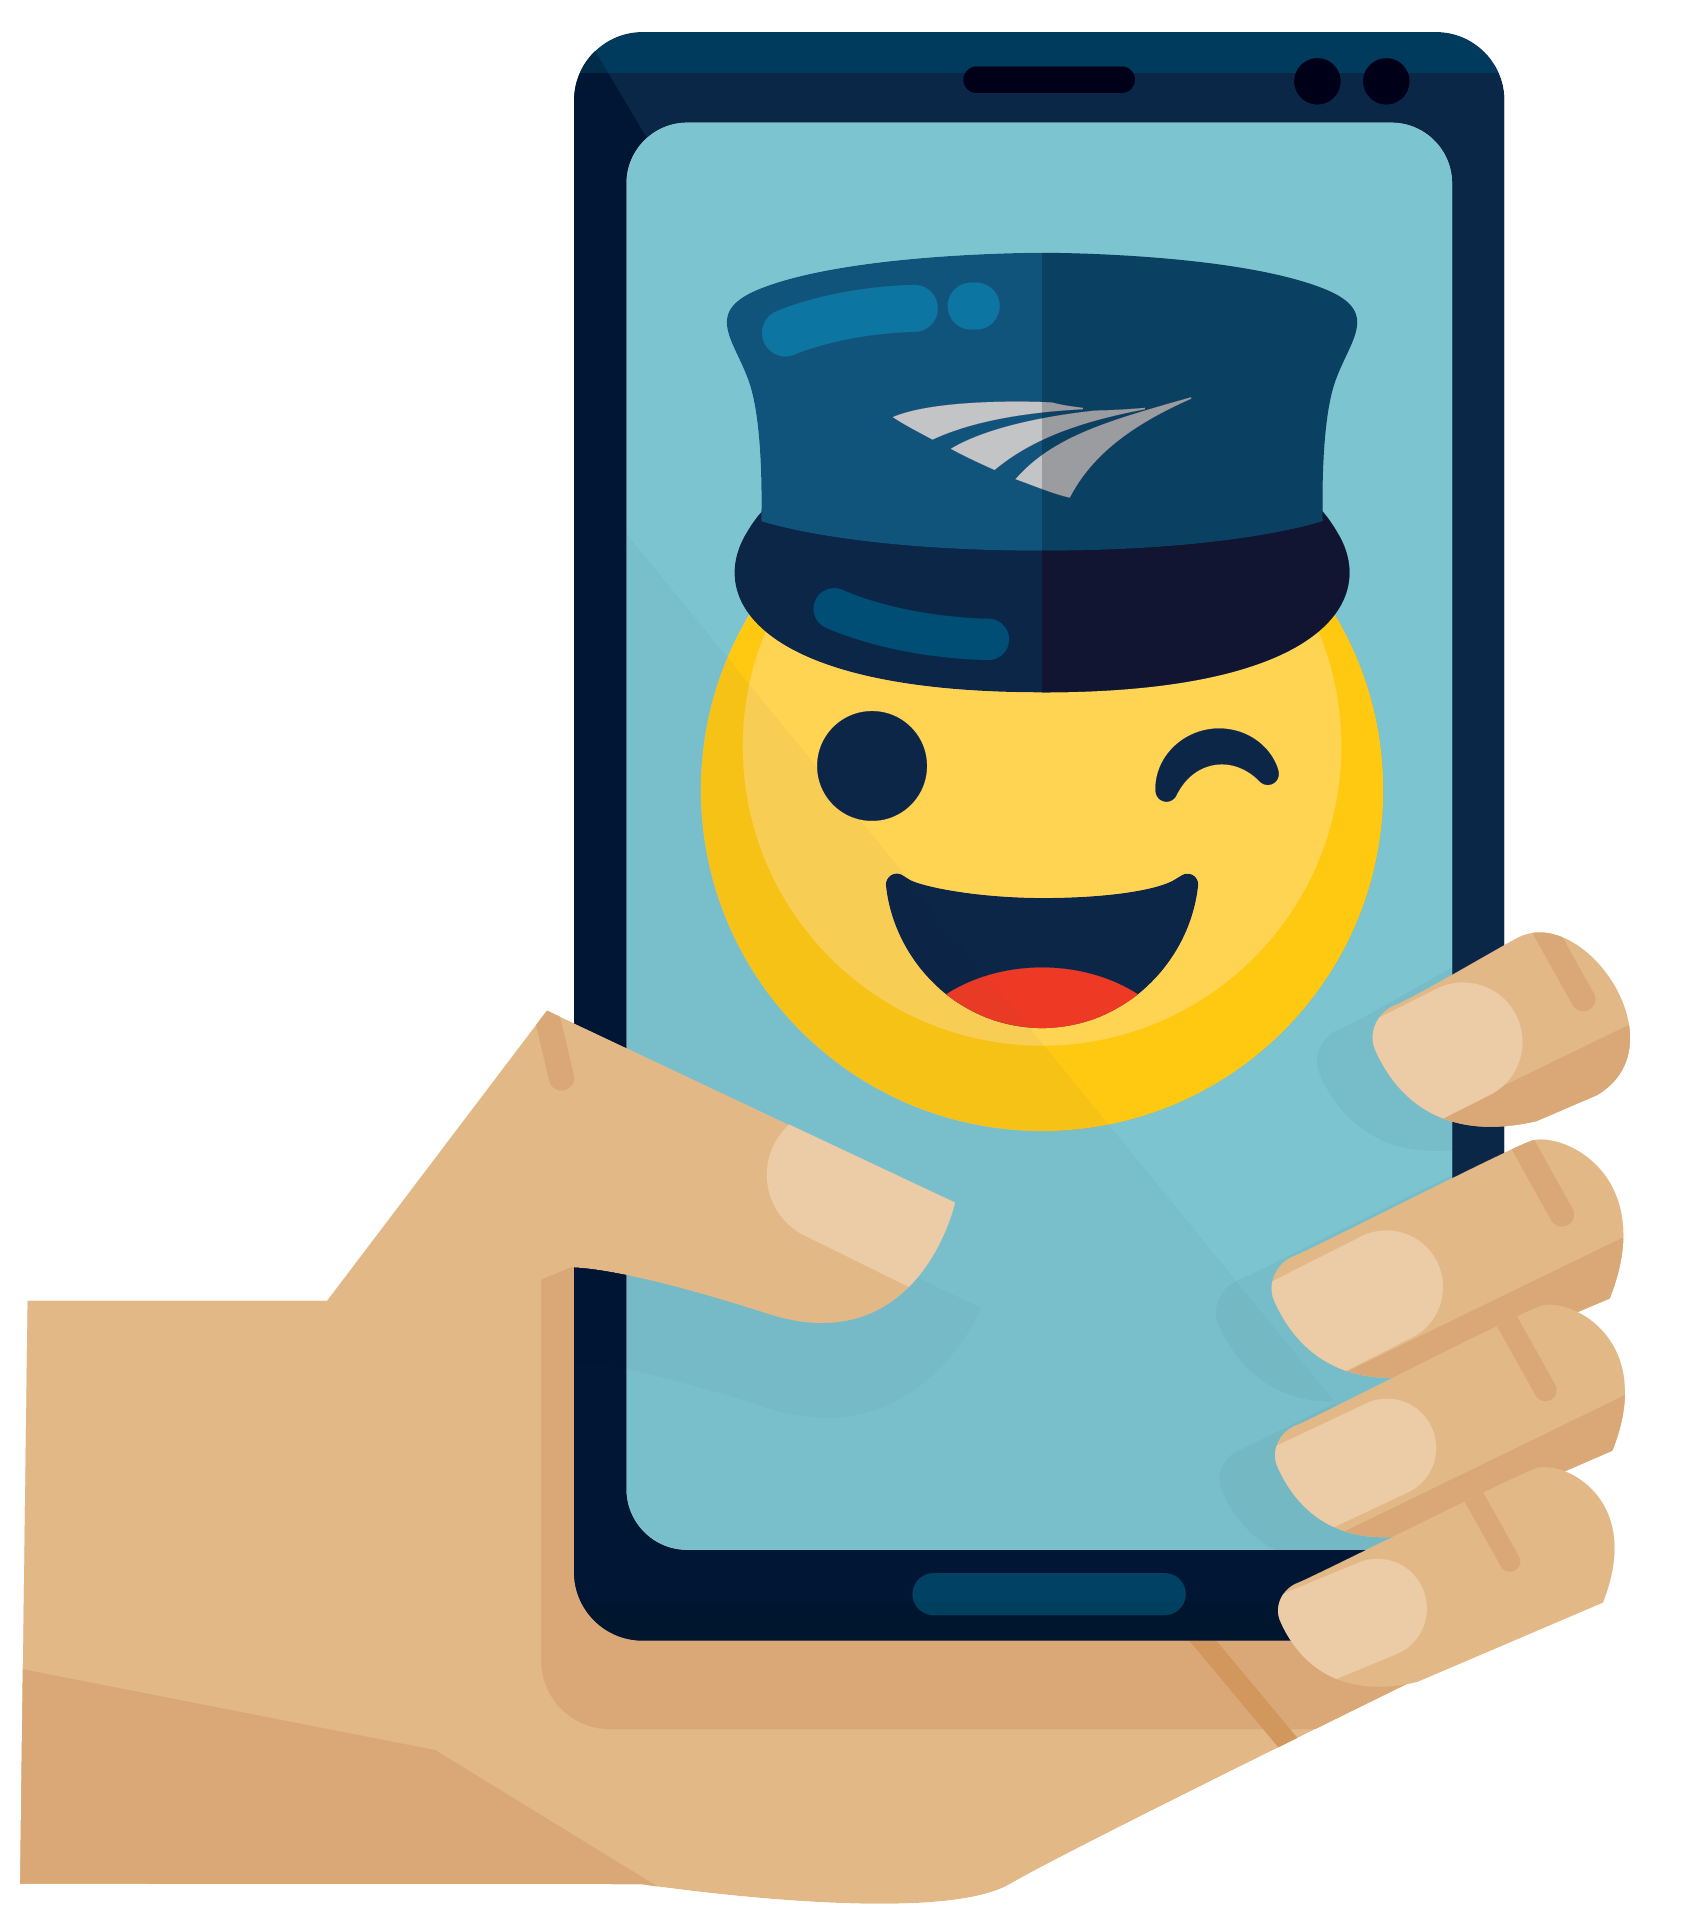 Conductor emoji on smartphone to represent Amtrak's social media.